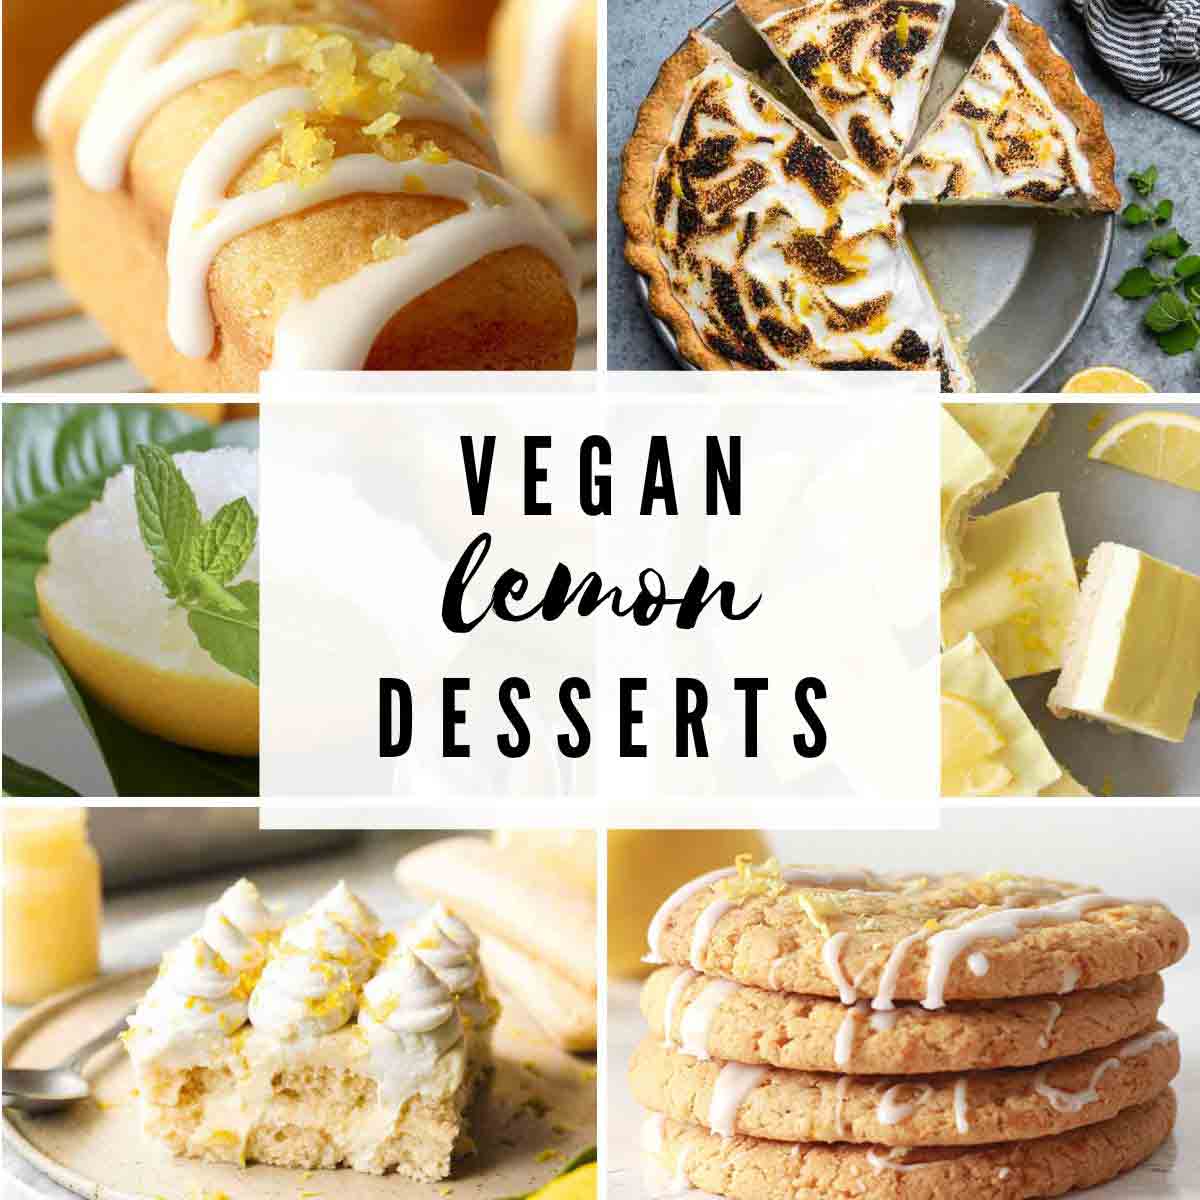 6 Desserts With Text Overlay That Reads 'vegan Lemon Desserts'